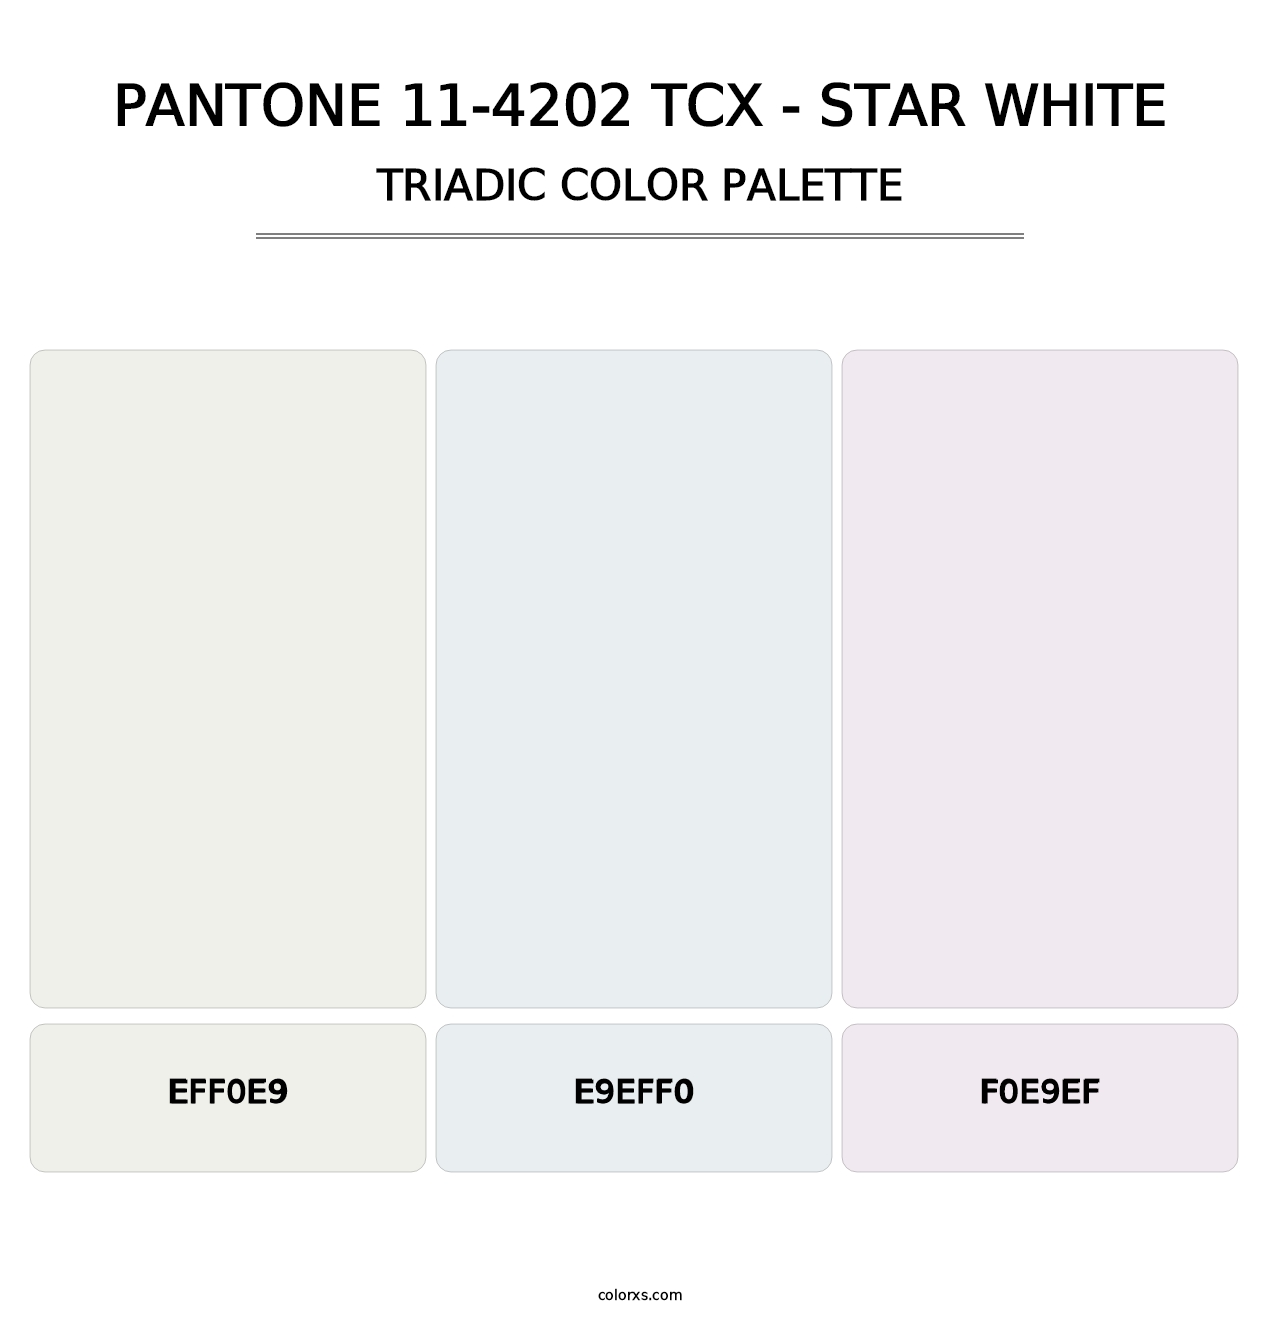 PANTONE 11-4202 TCX - Star White - Triadic Color Palette